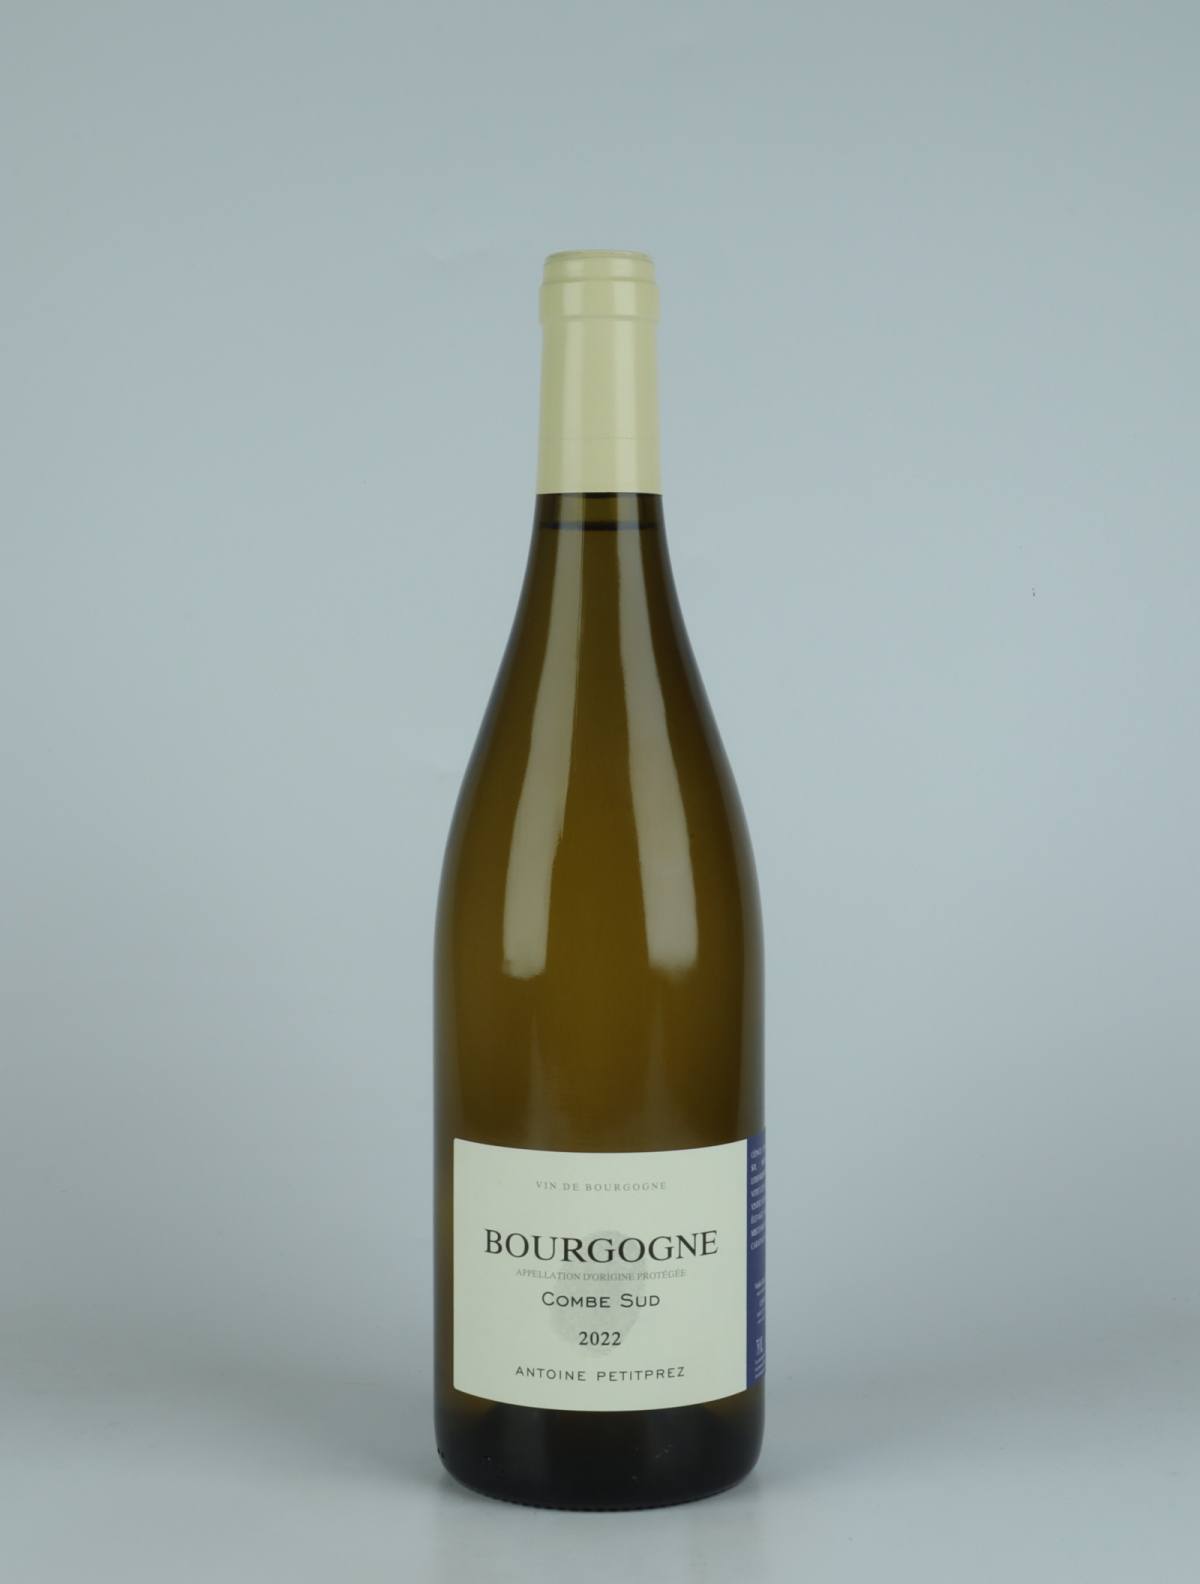 En flaske 2022 Bourgogne Blanc - La Combe Sud Hvidvin fra Antoine Petitprez, Bourgogne i Frankrig